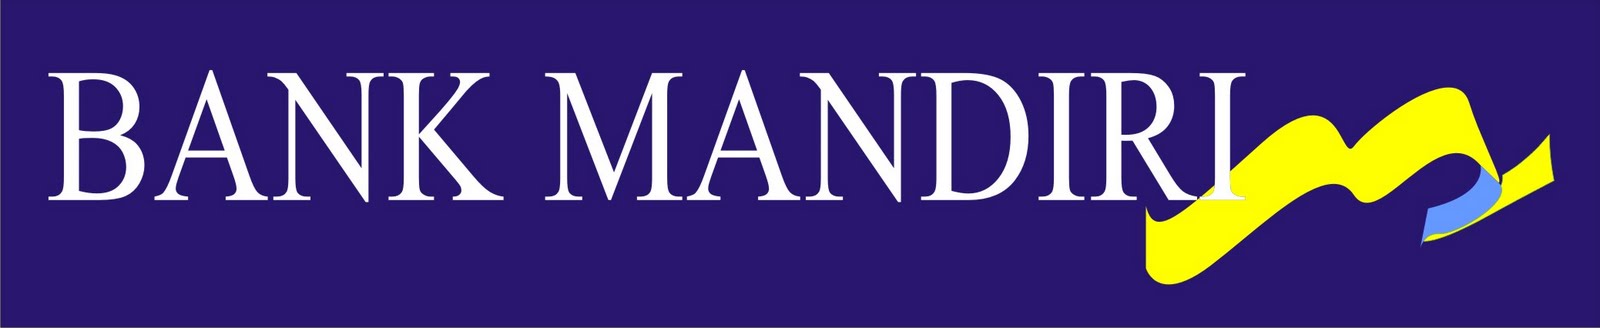 Free Logo  Design Company Logo  Bank Mandiri  Vector  for 